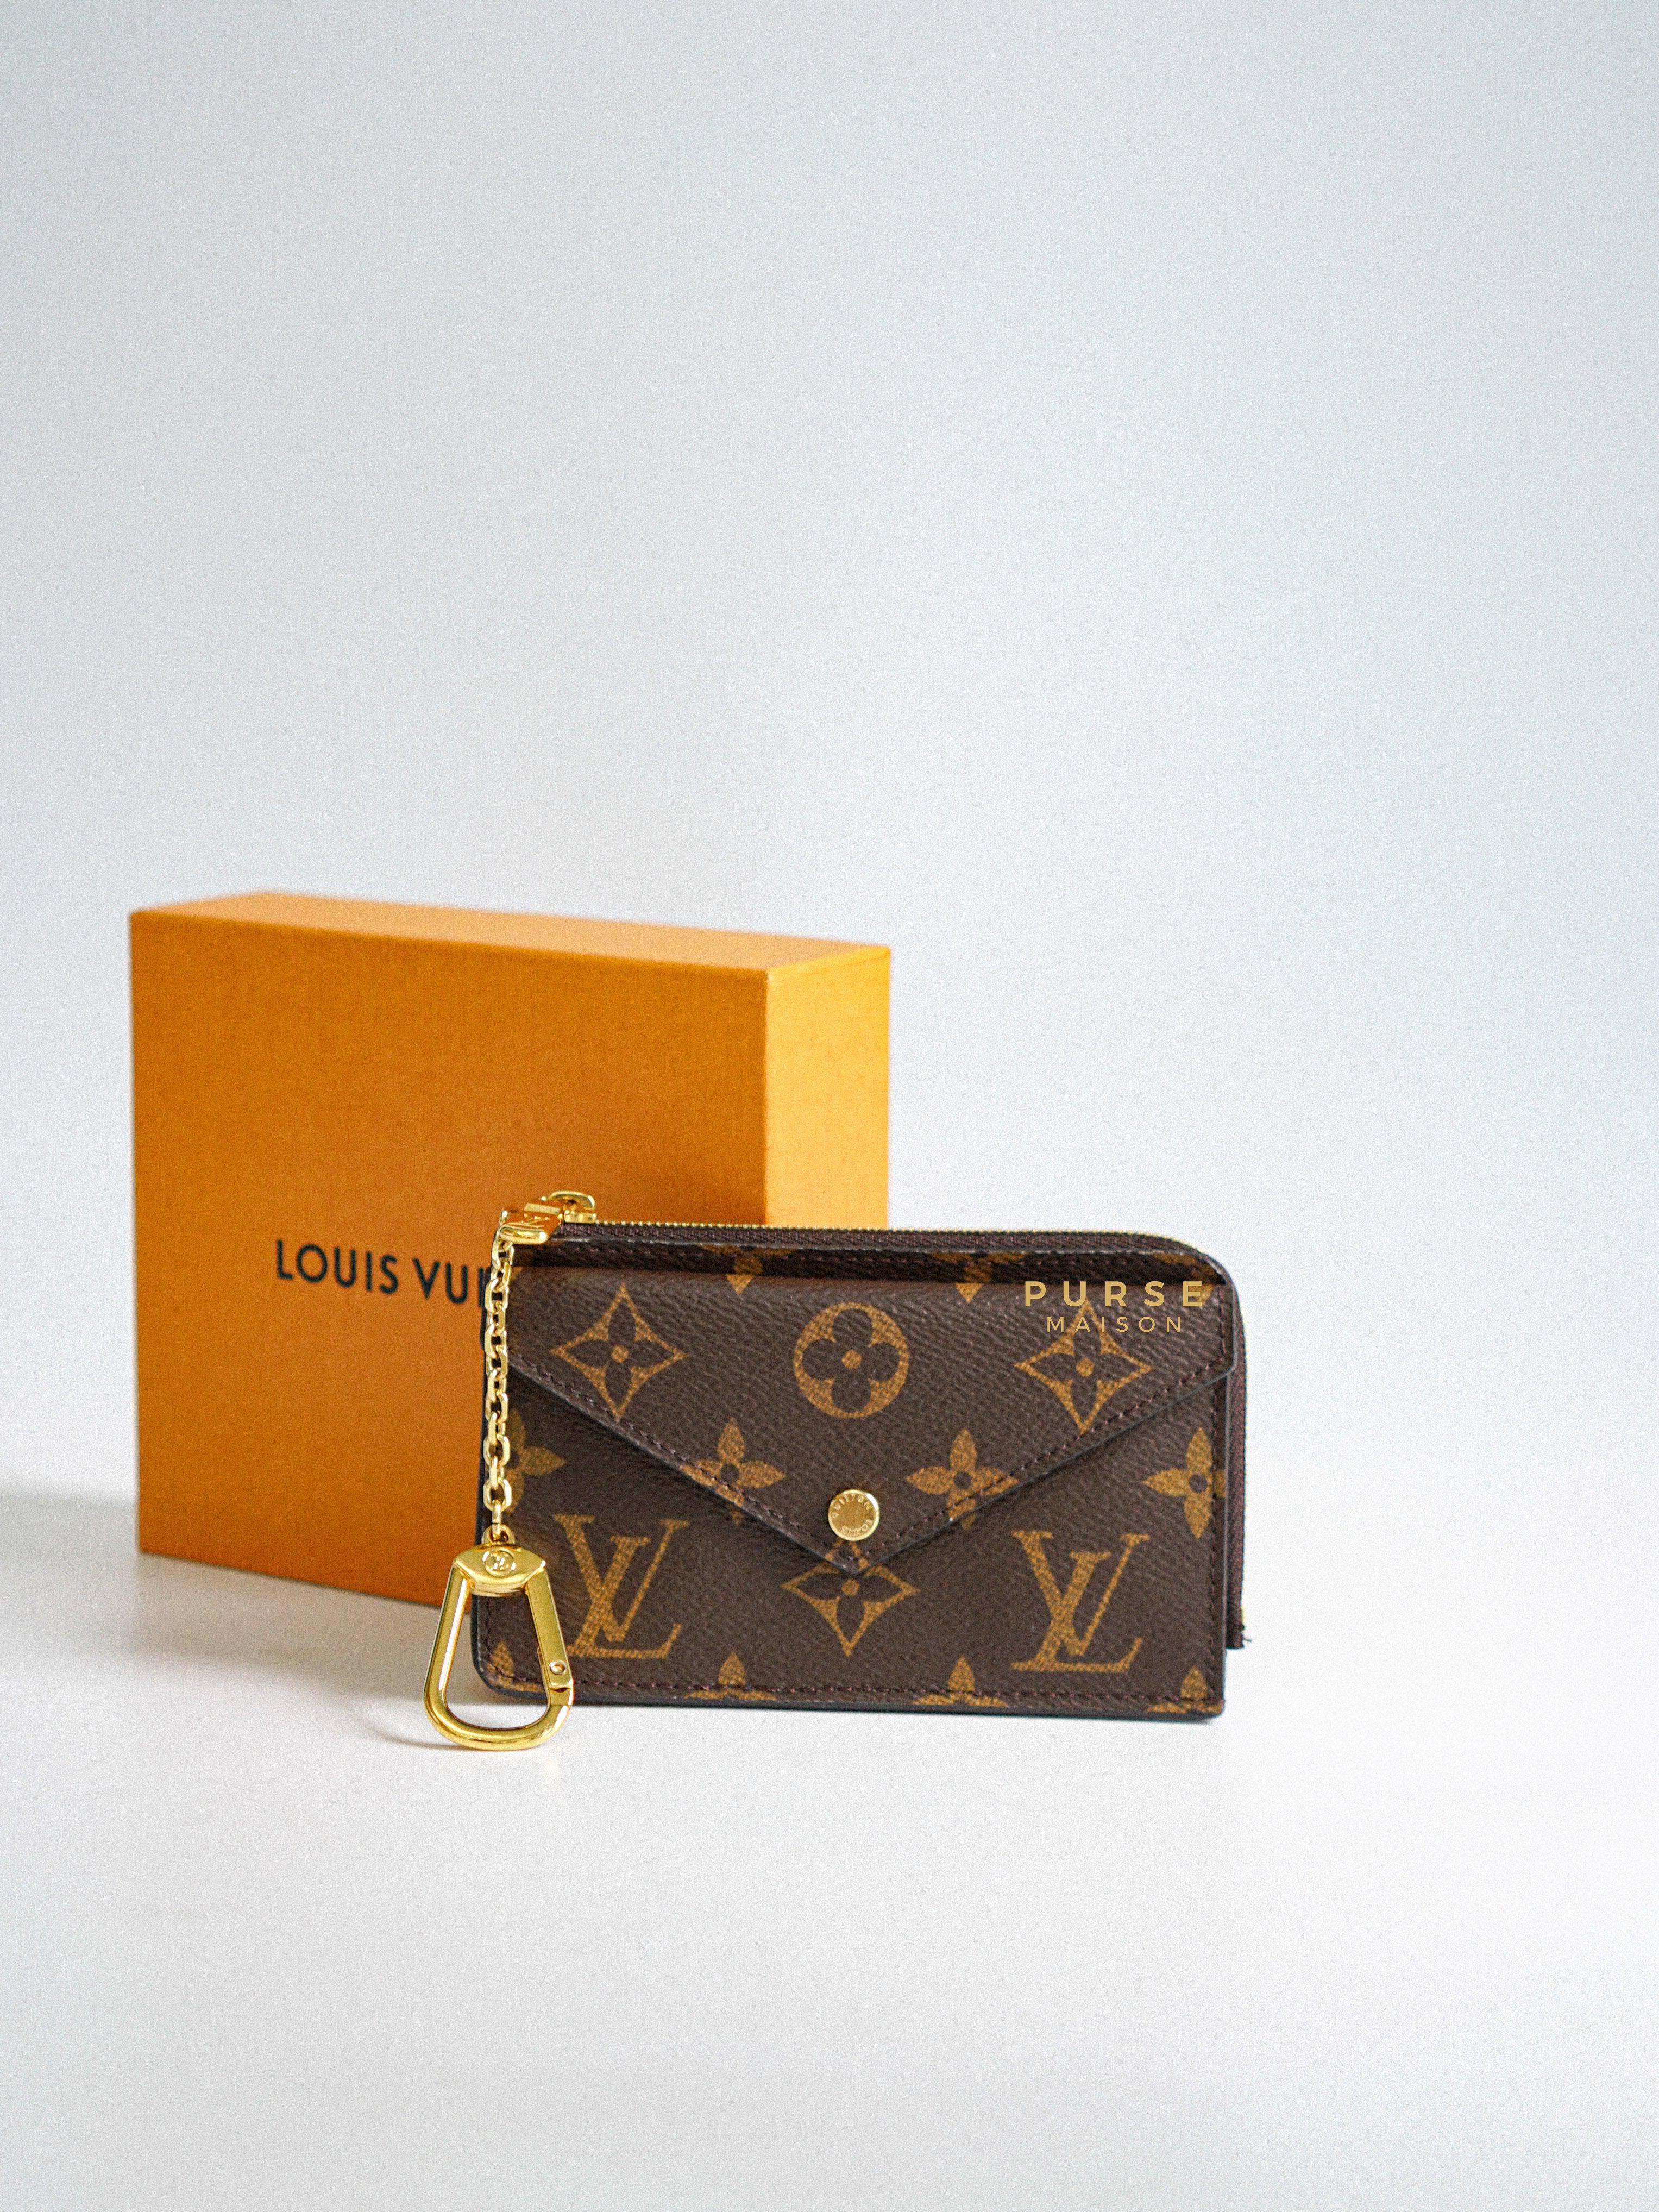 Louis Vuitton Recto Verso Card Holder in Monogram Canvas (Date Code: MI3260) | Purse Maison Luxury Bags Shop